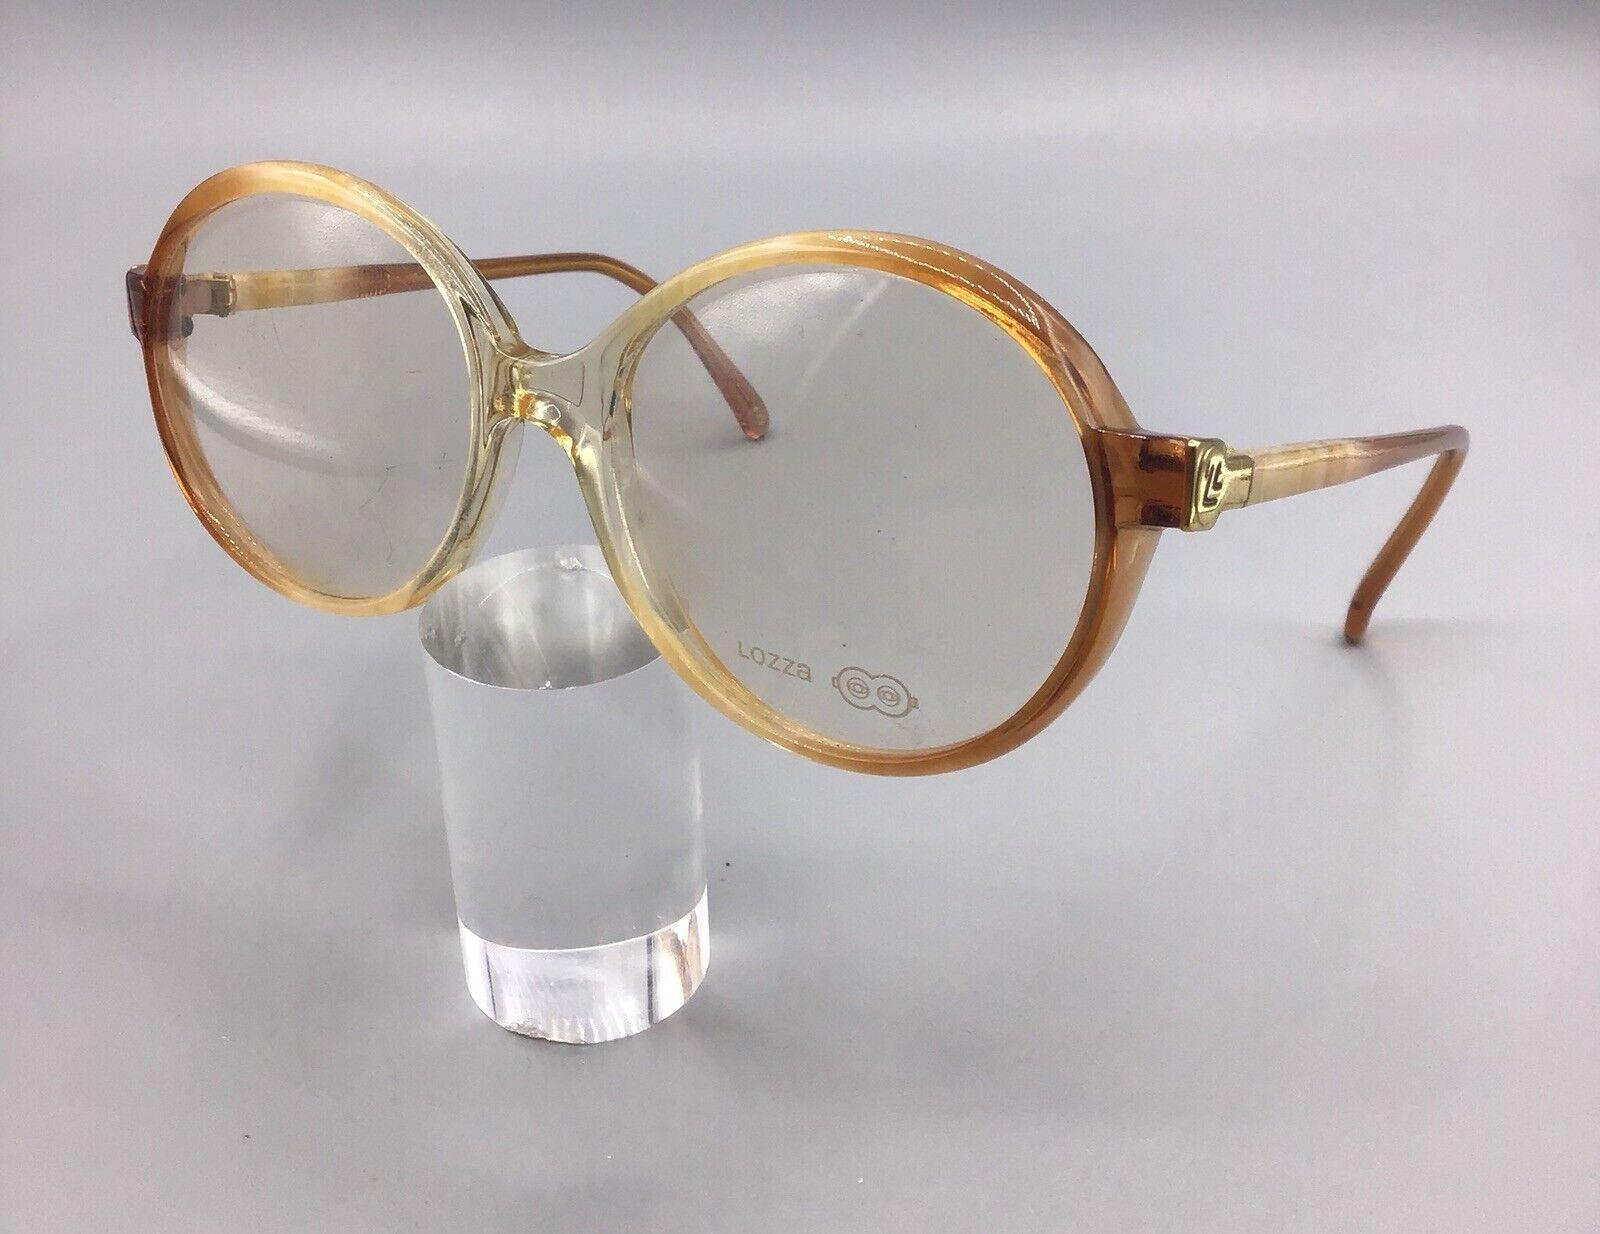 Lozza Daunia frame Italy occhiale vintage eyewear frame brillen lunettes